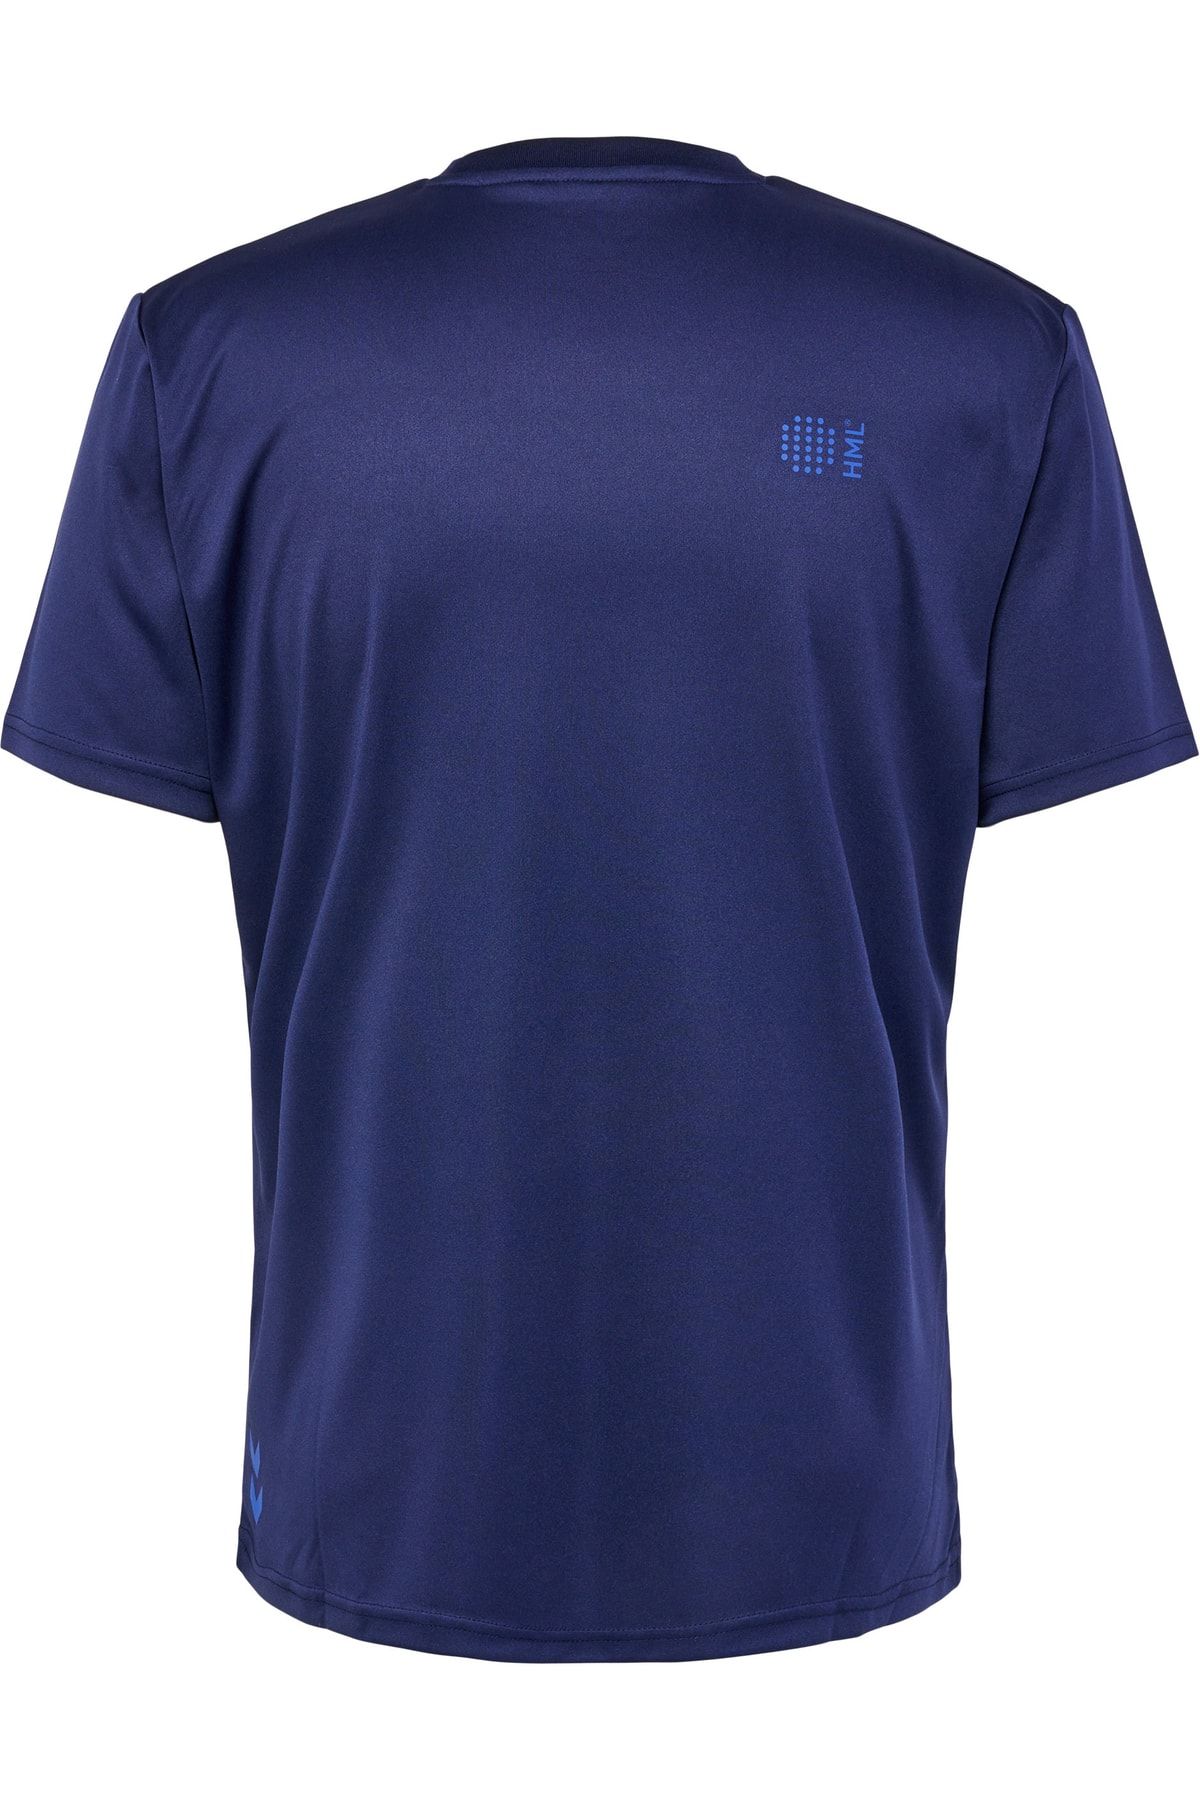 - Trendyol T-Shirt Fit - - Regular Blau HUMMEL